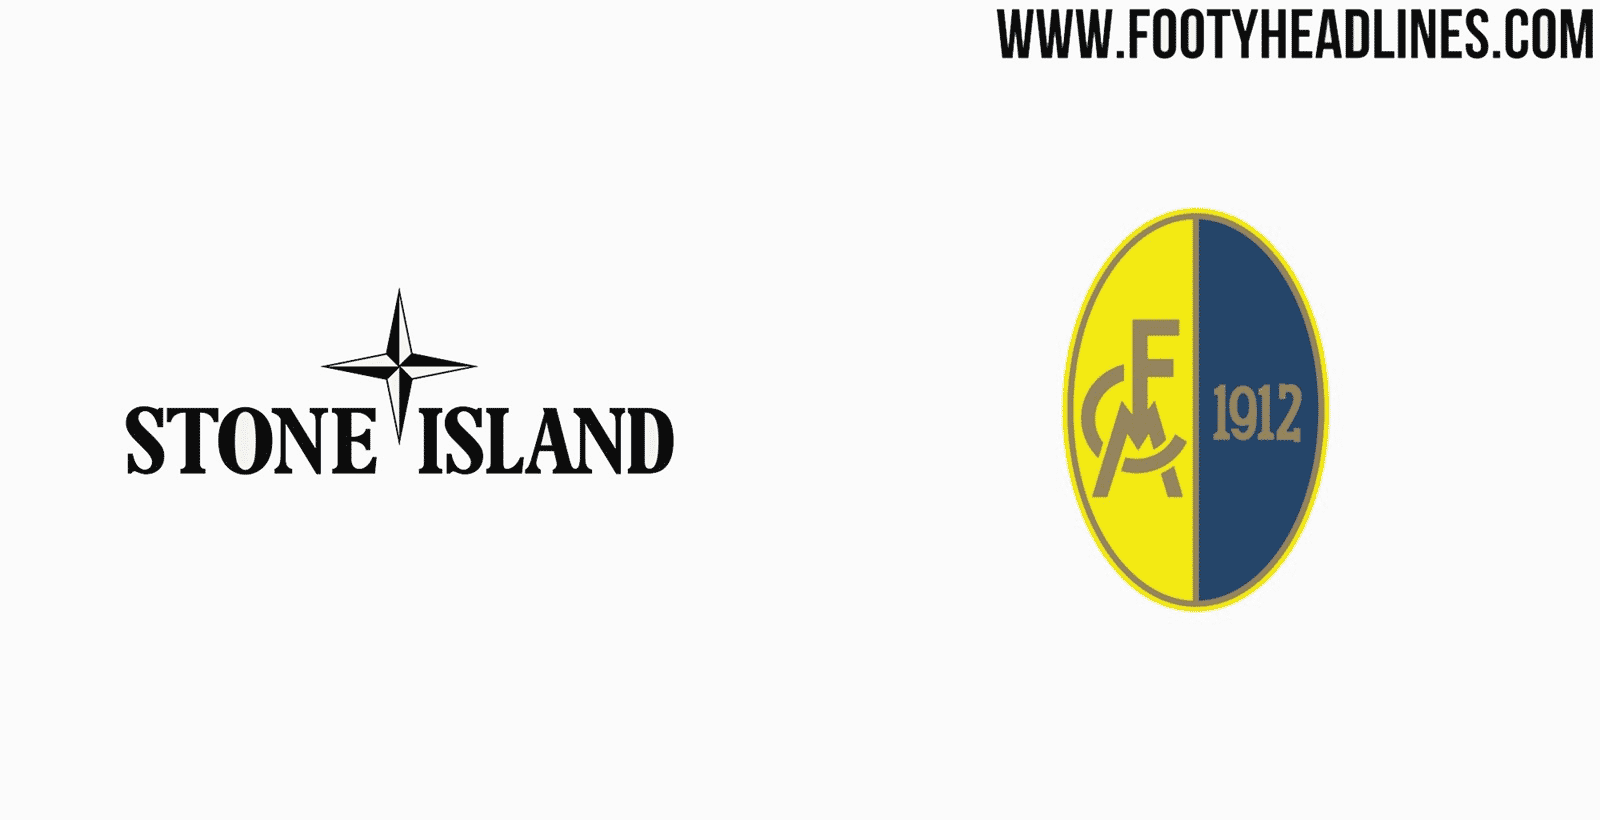 Stone Island: Brand Overview